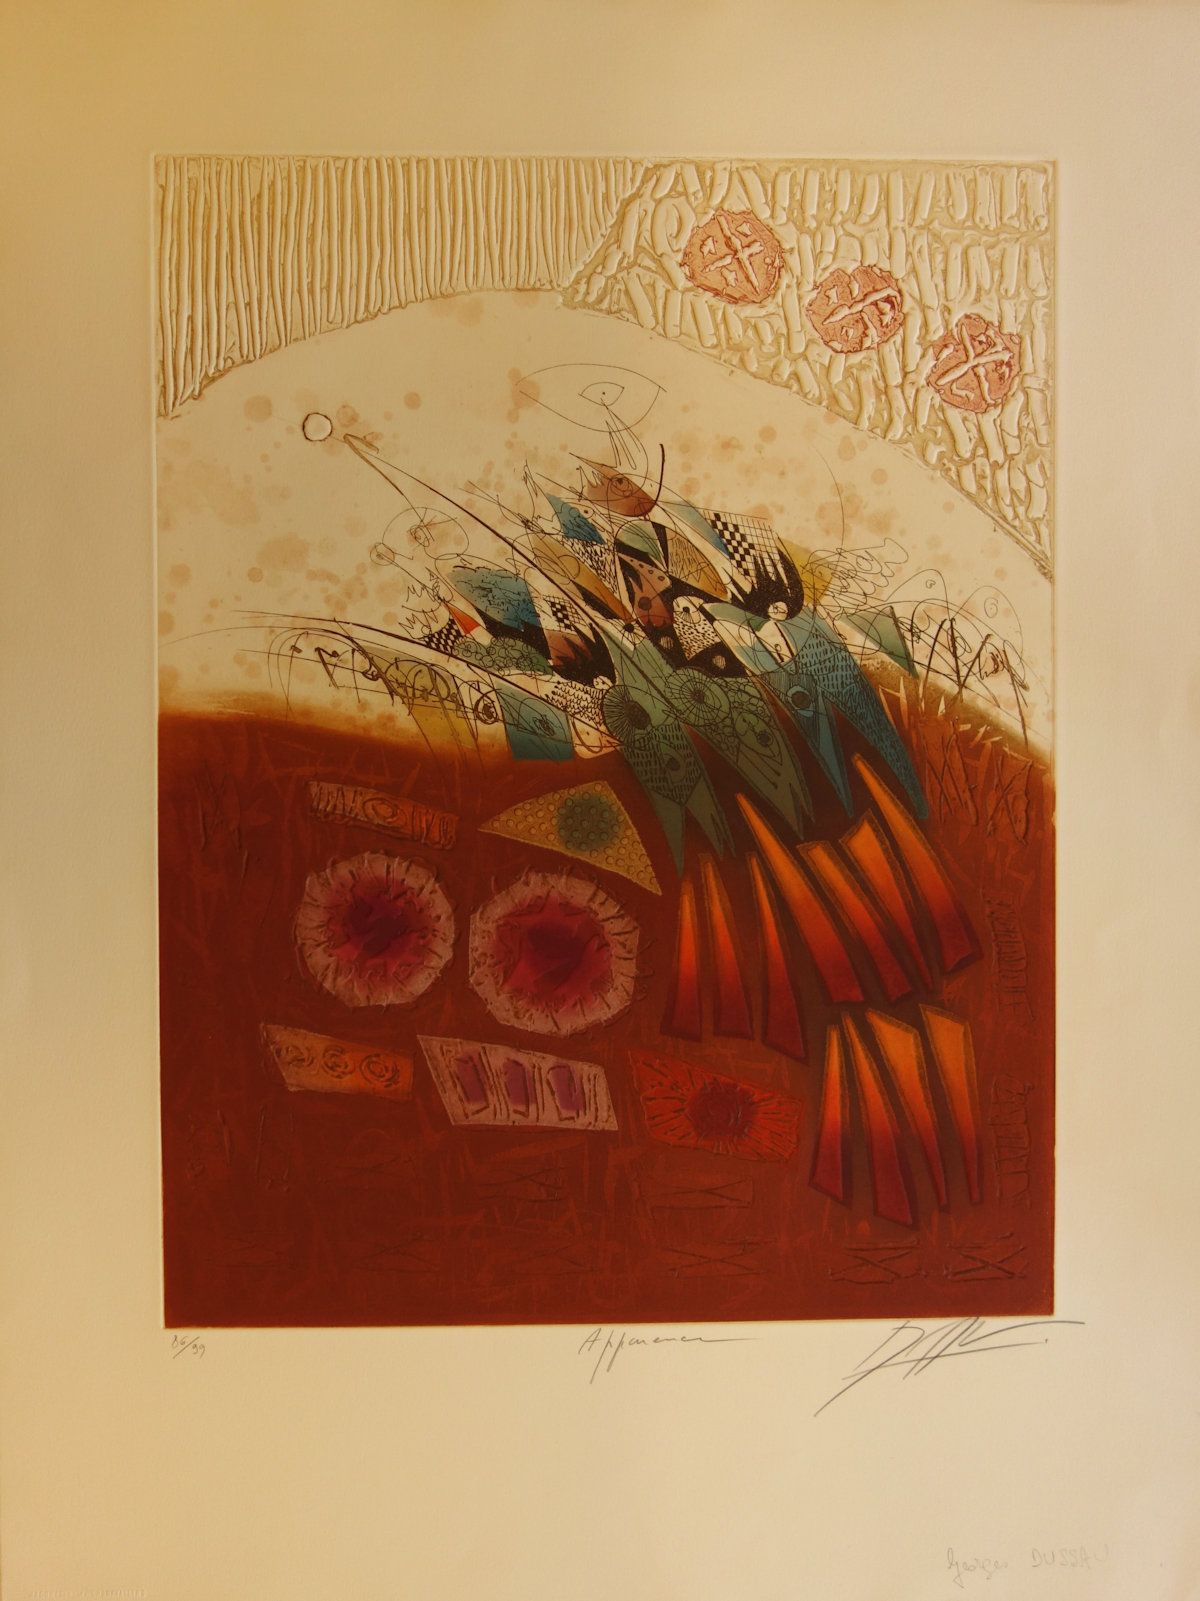 Georges Dussau Georges DUSSAU

出场

原始蚀刻画

用铅笔签名

编号为/99

在拱形牛皮纸上 76 x 56 厘米

状况极&hellip;